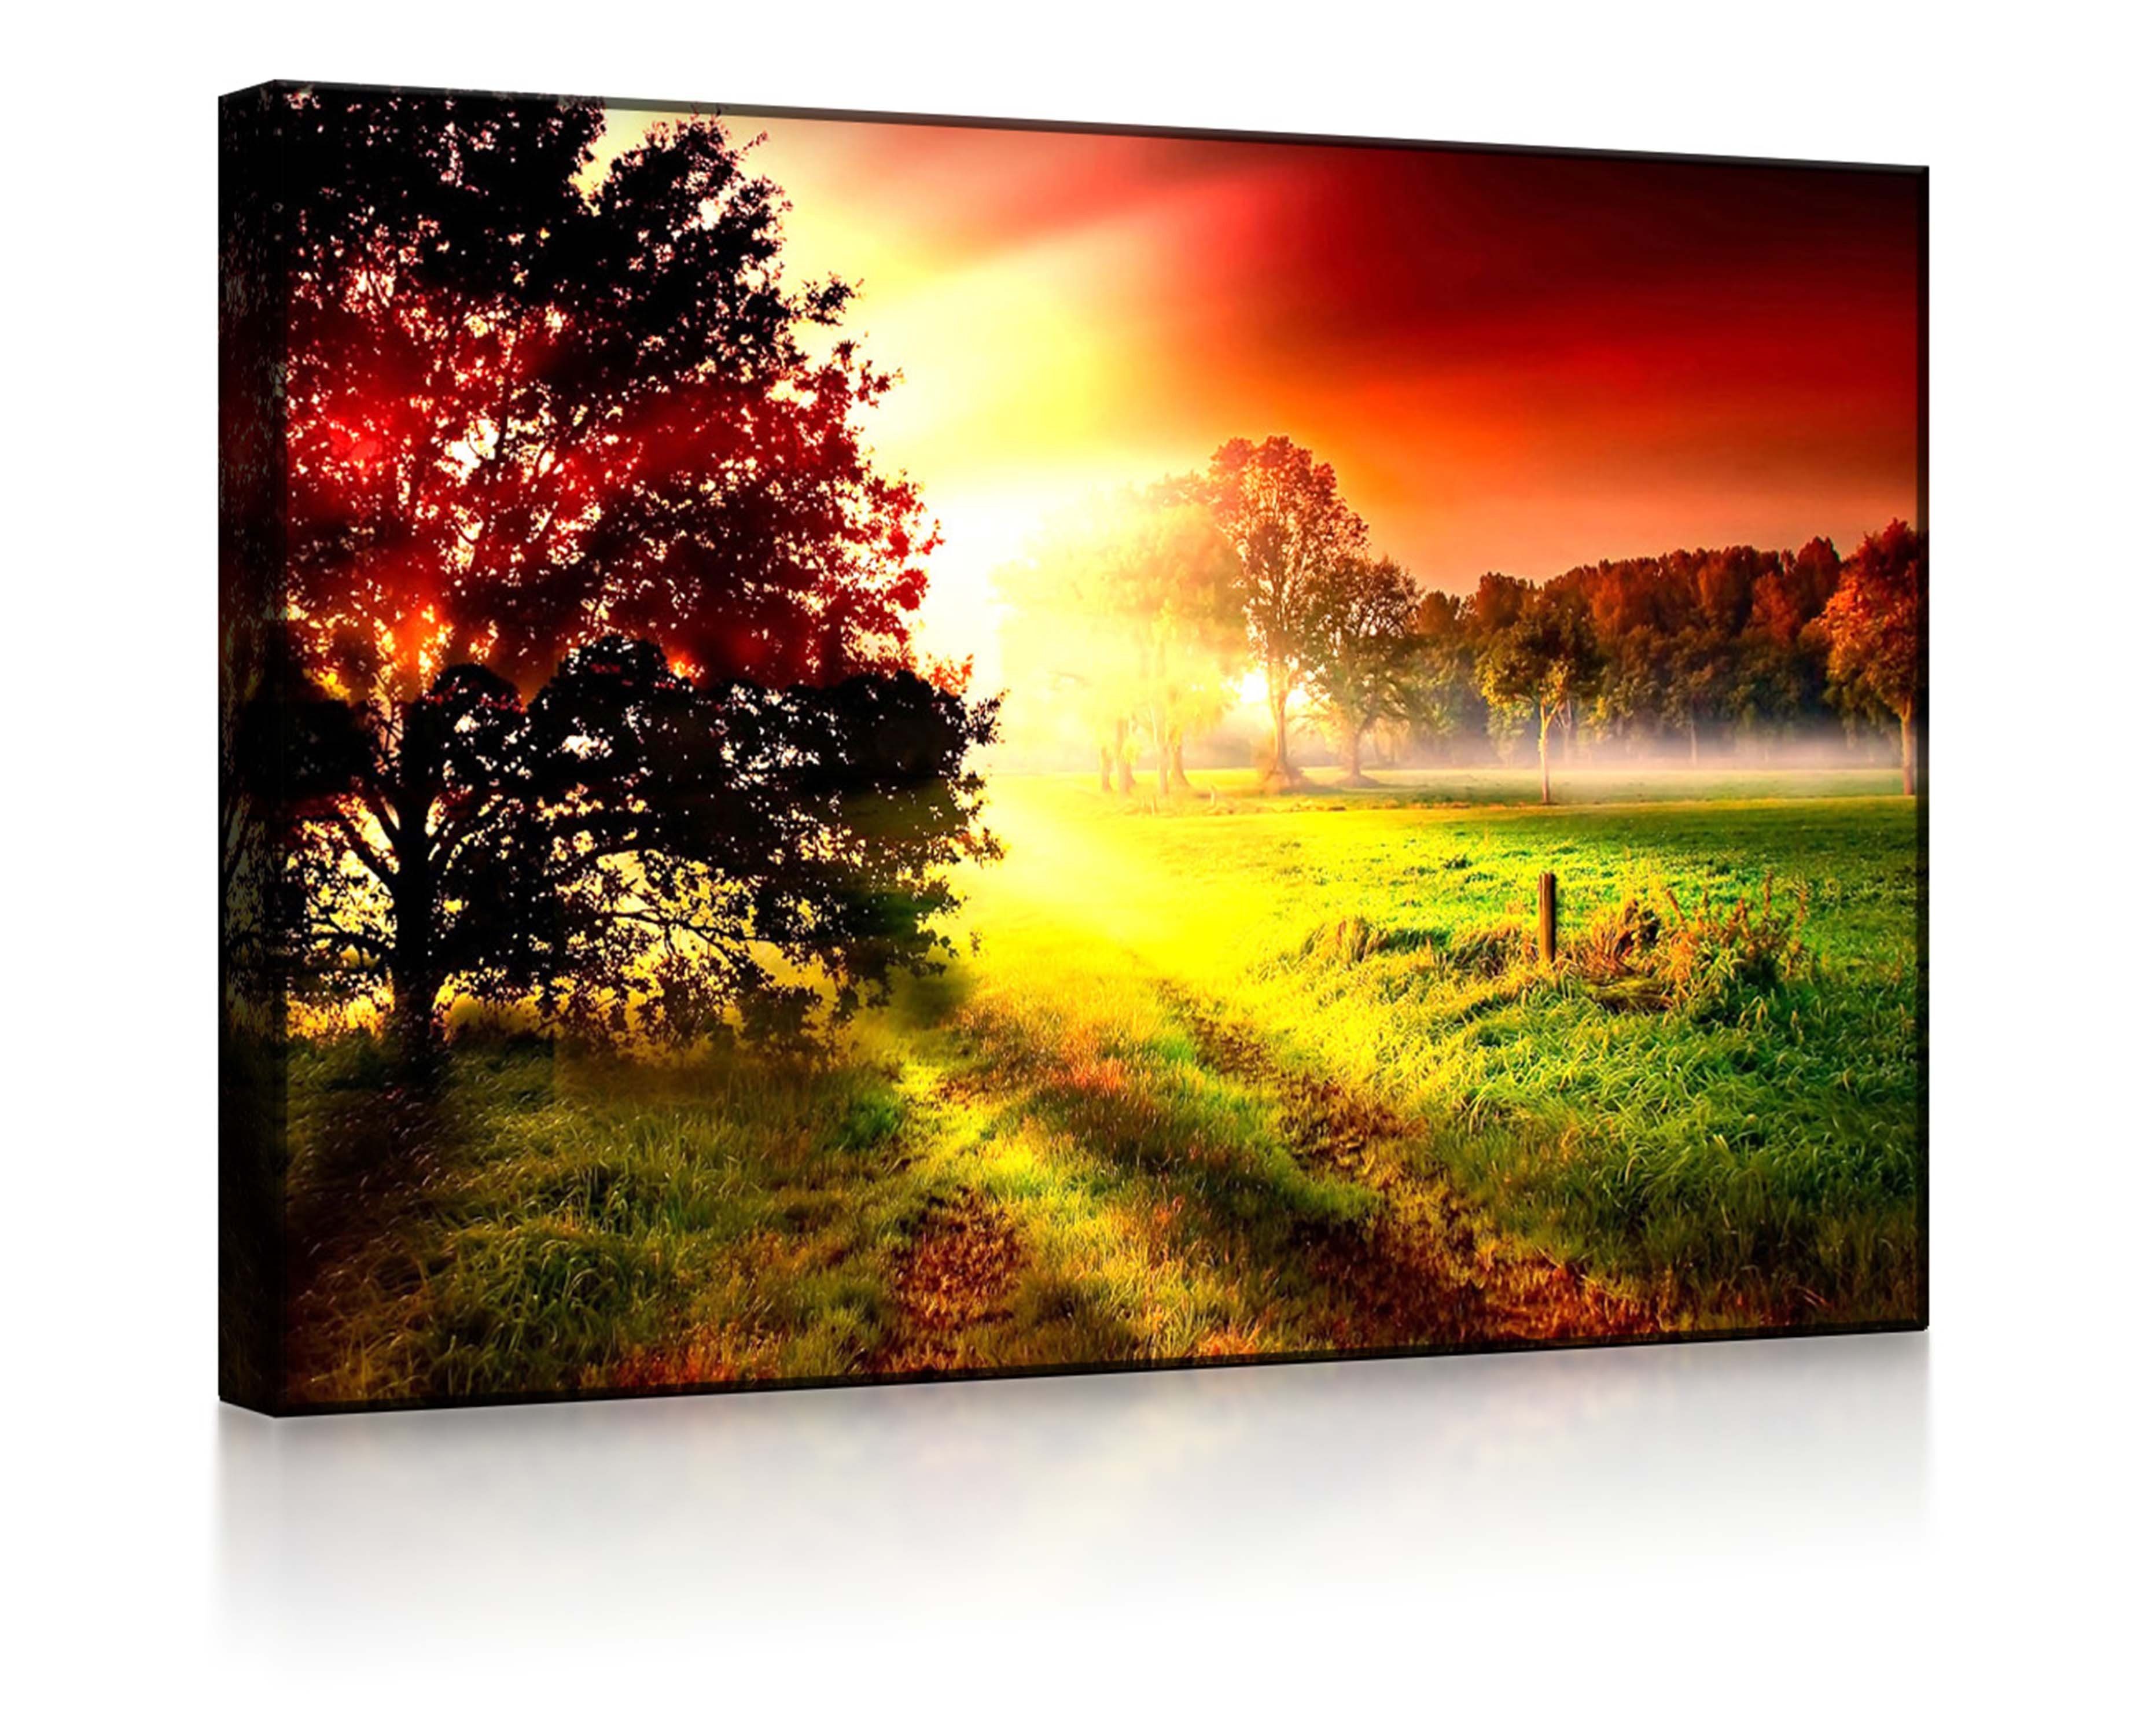 lightbox-multicolor LED-Bild Sonnenuntergang an nebliger Lichtung front lighted / 80x60cm, Leuchtbild mit Fernbedienung